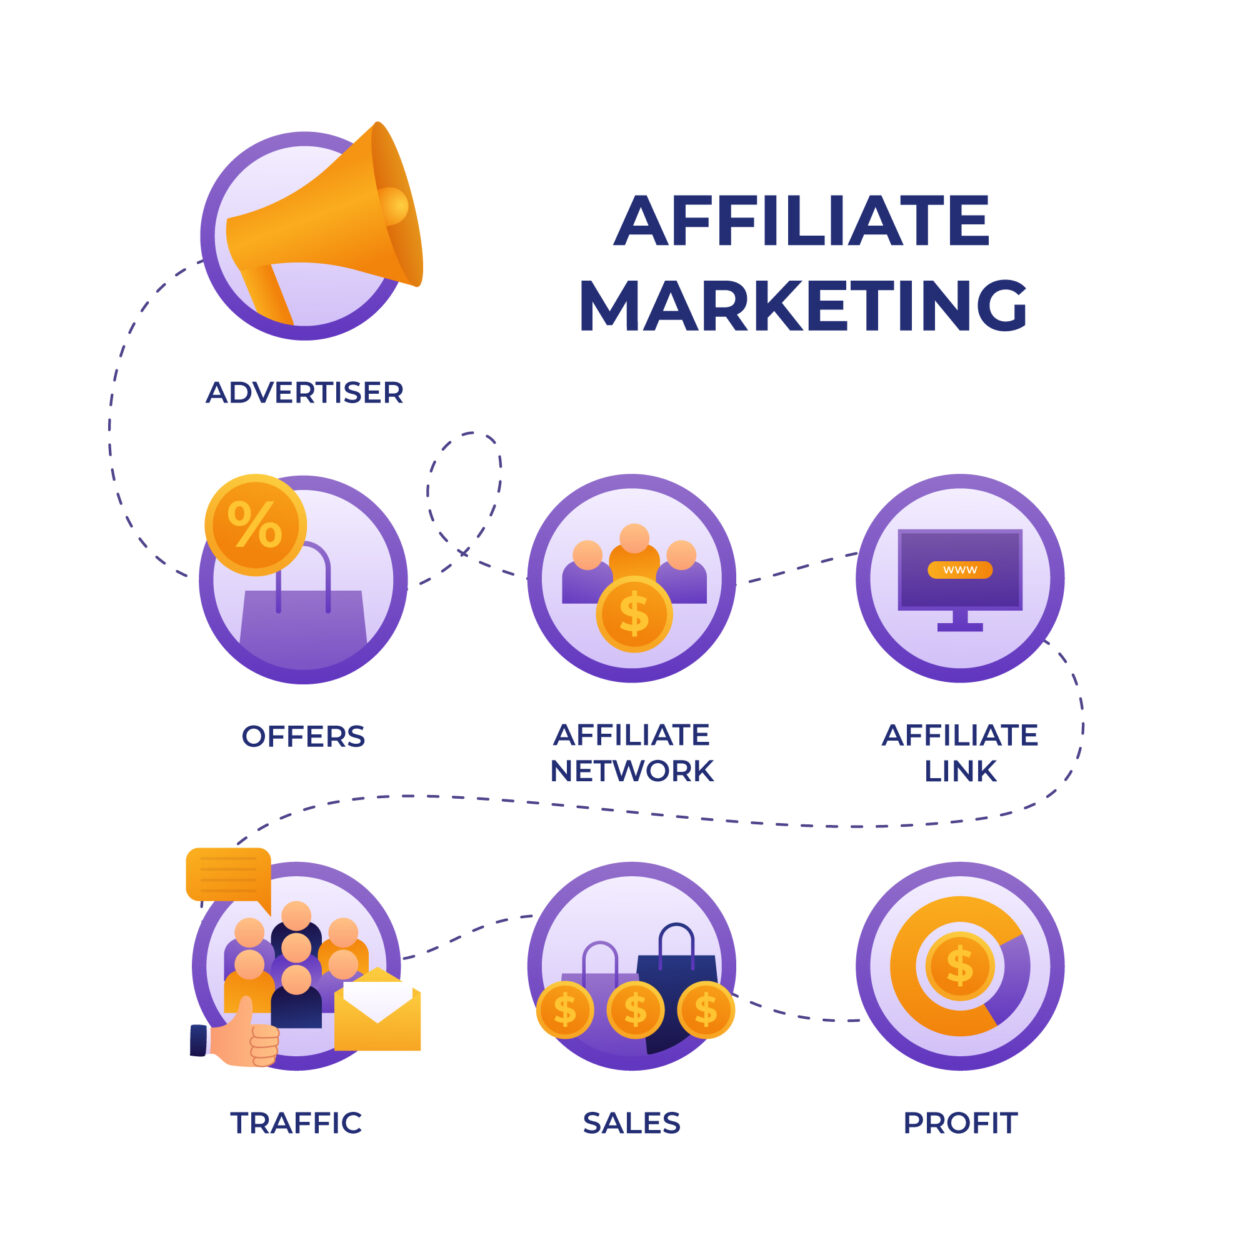 Affiliate marketing:Advertiser-Offers-Network-Link-Traffic-Sakes-Profit